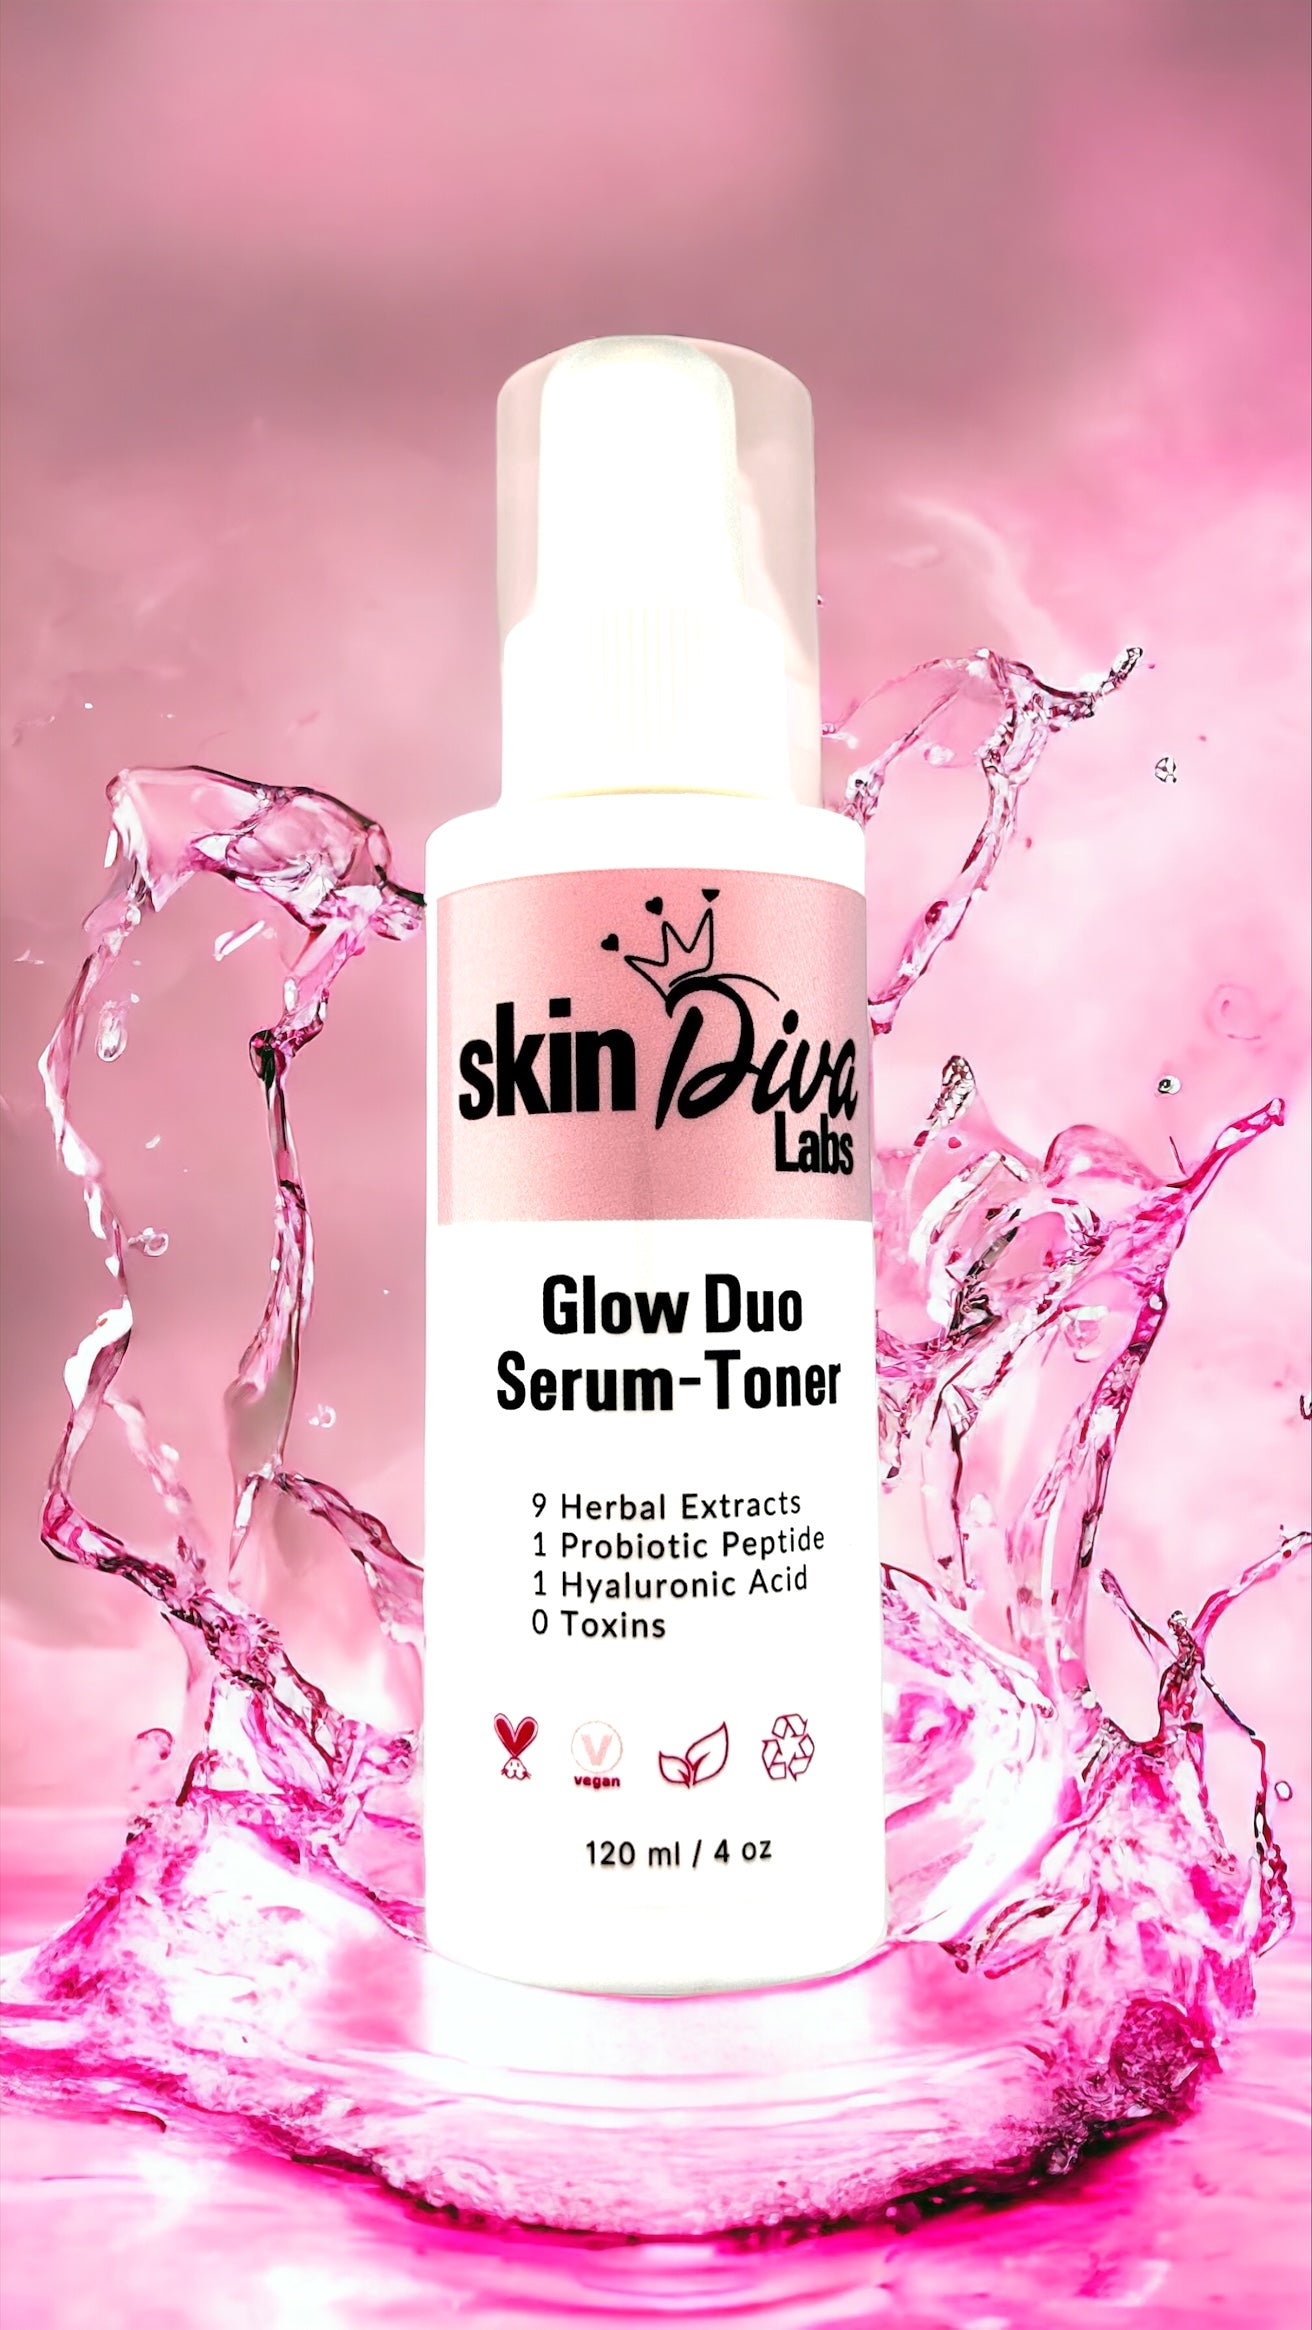 Glow Duo Serum-Toner by Skin Diva Labs - Hyaluronic